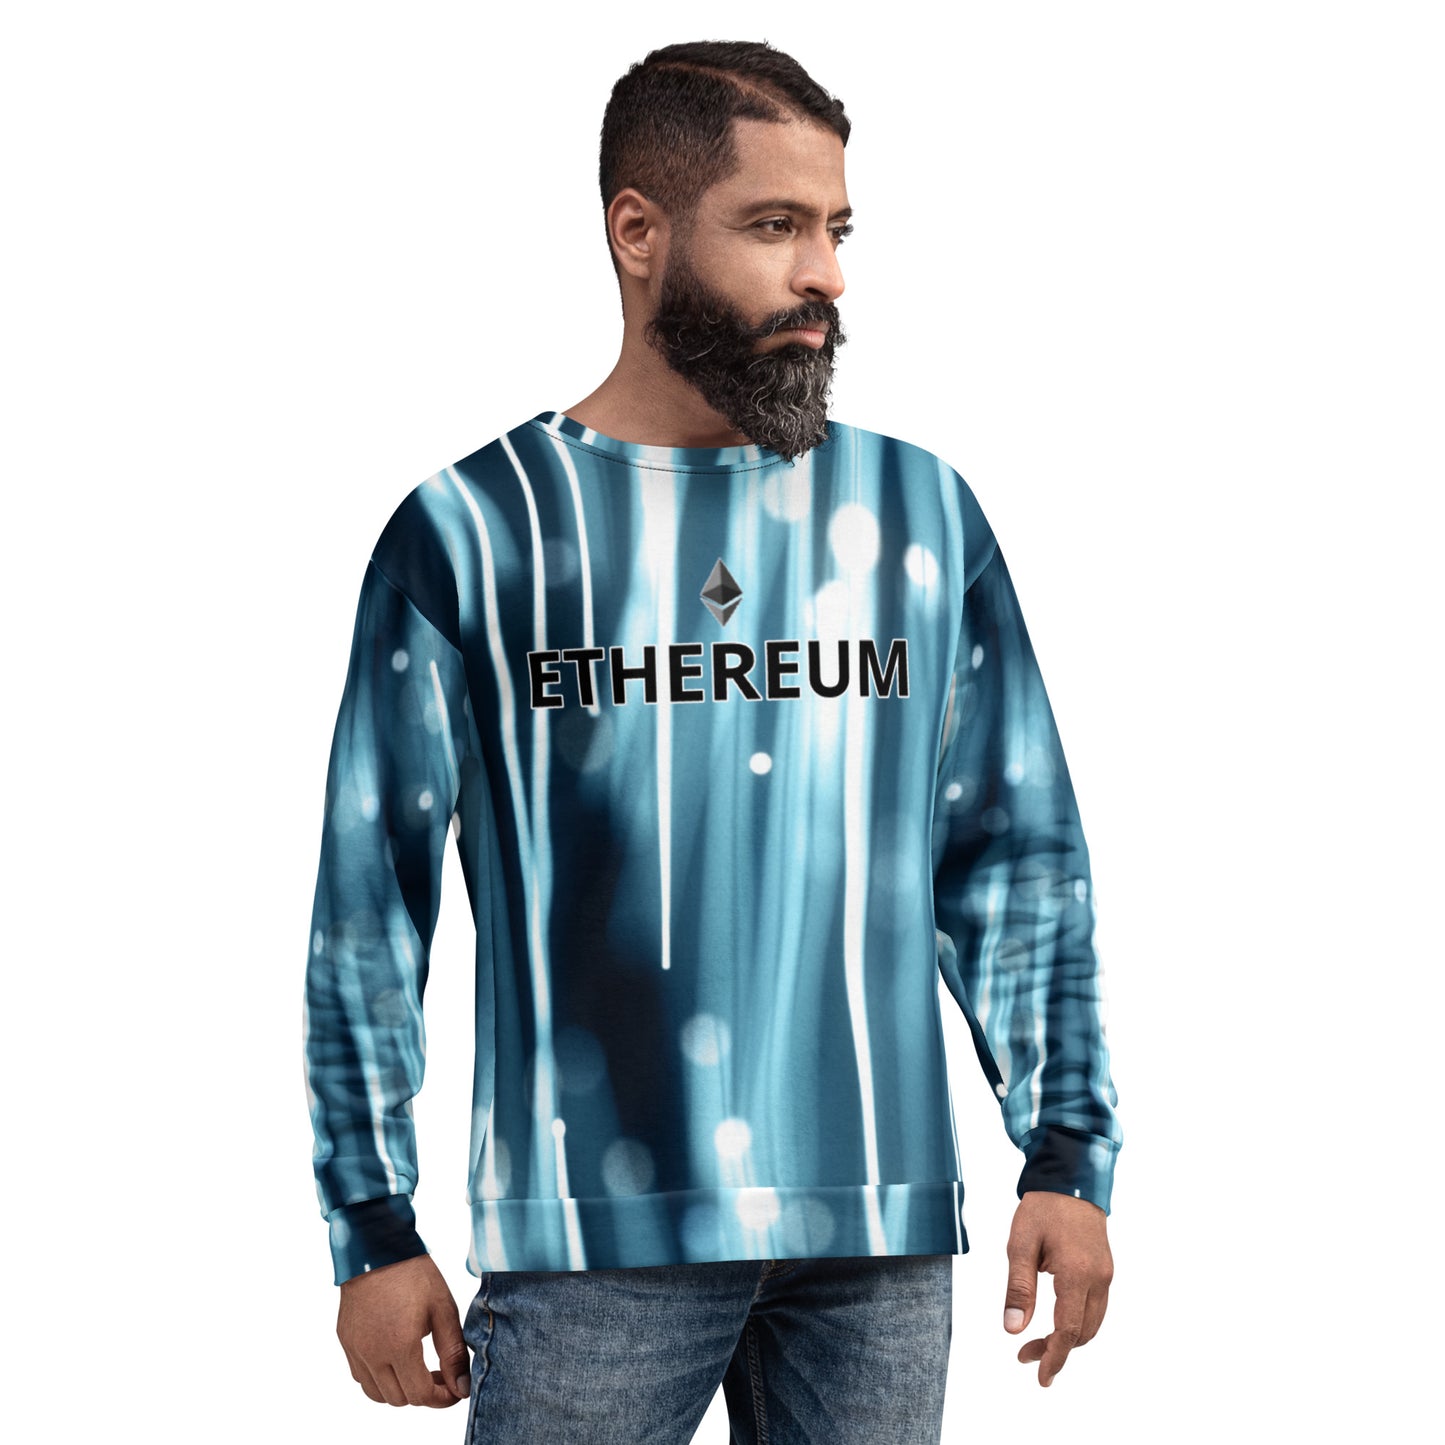 Ethereum Optics Sweatshirt